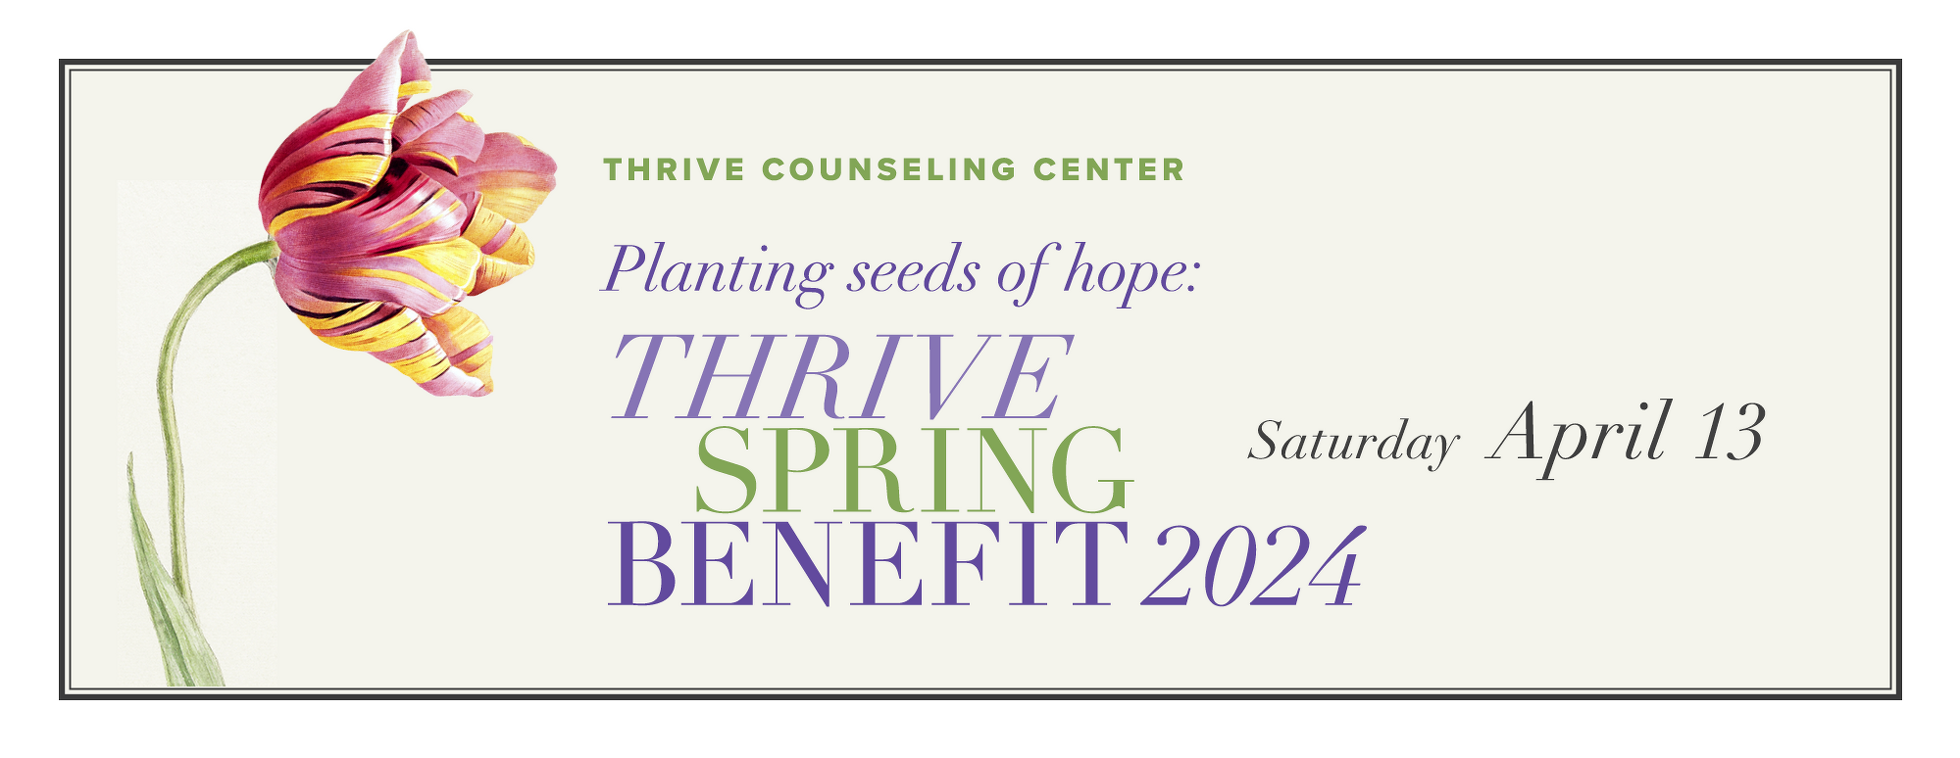 Thrive Spring Benefit 2024